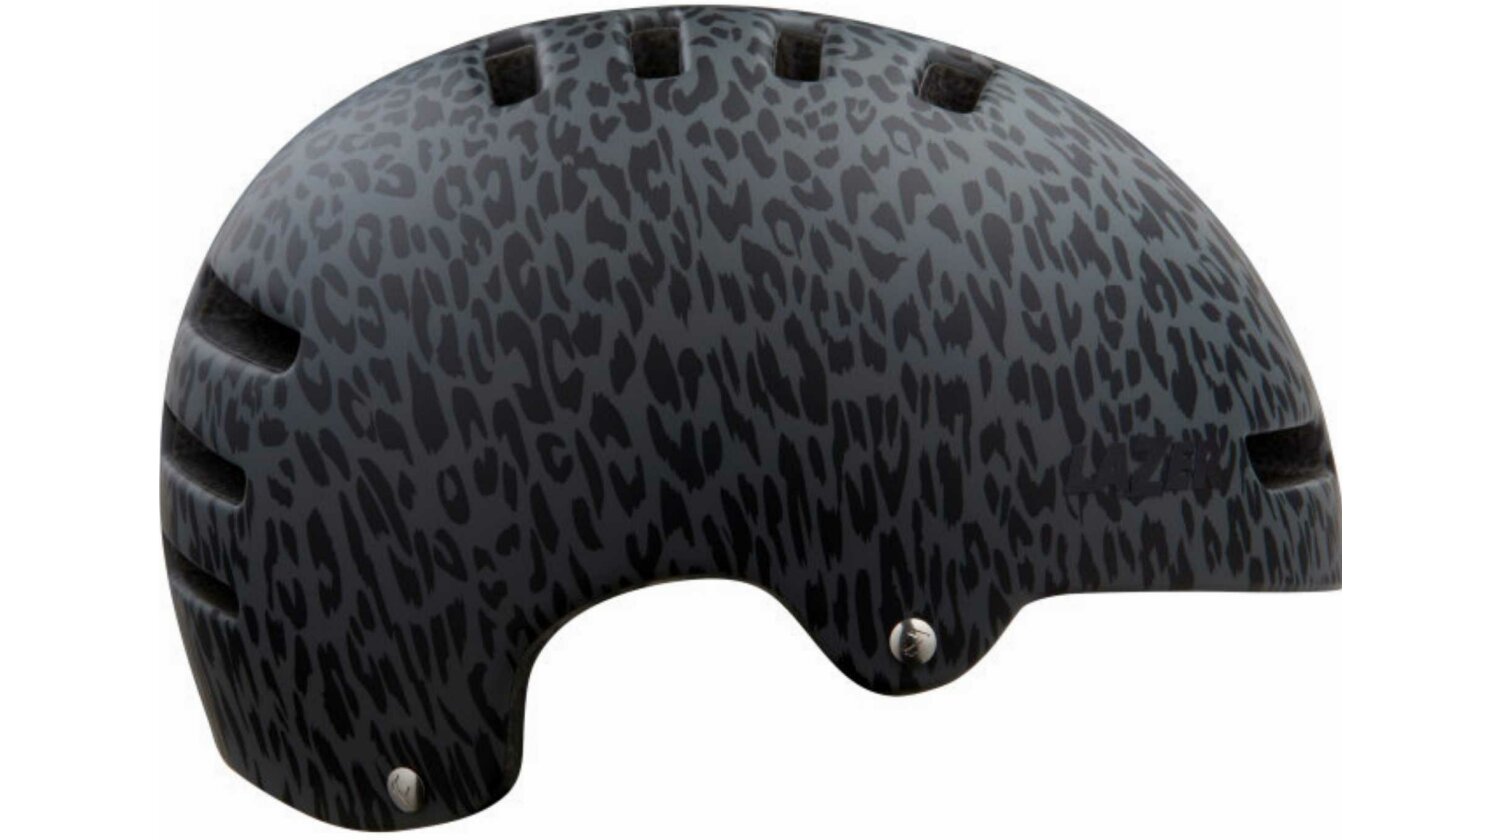 Lazer Armor 2.0 Helm matte leopard